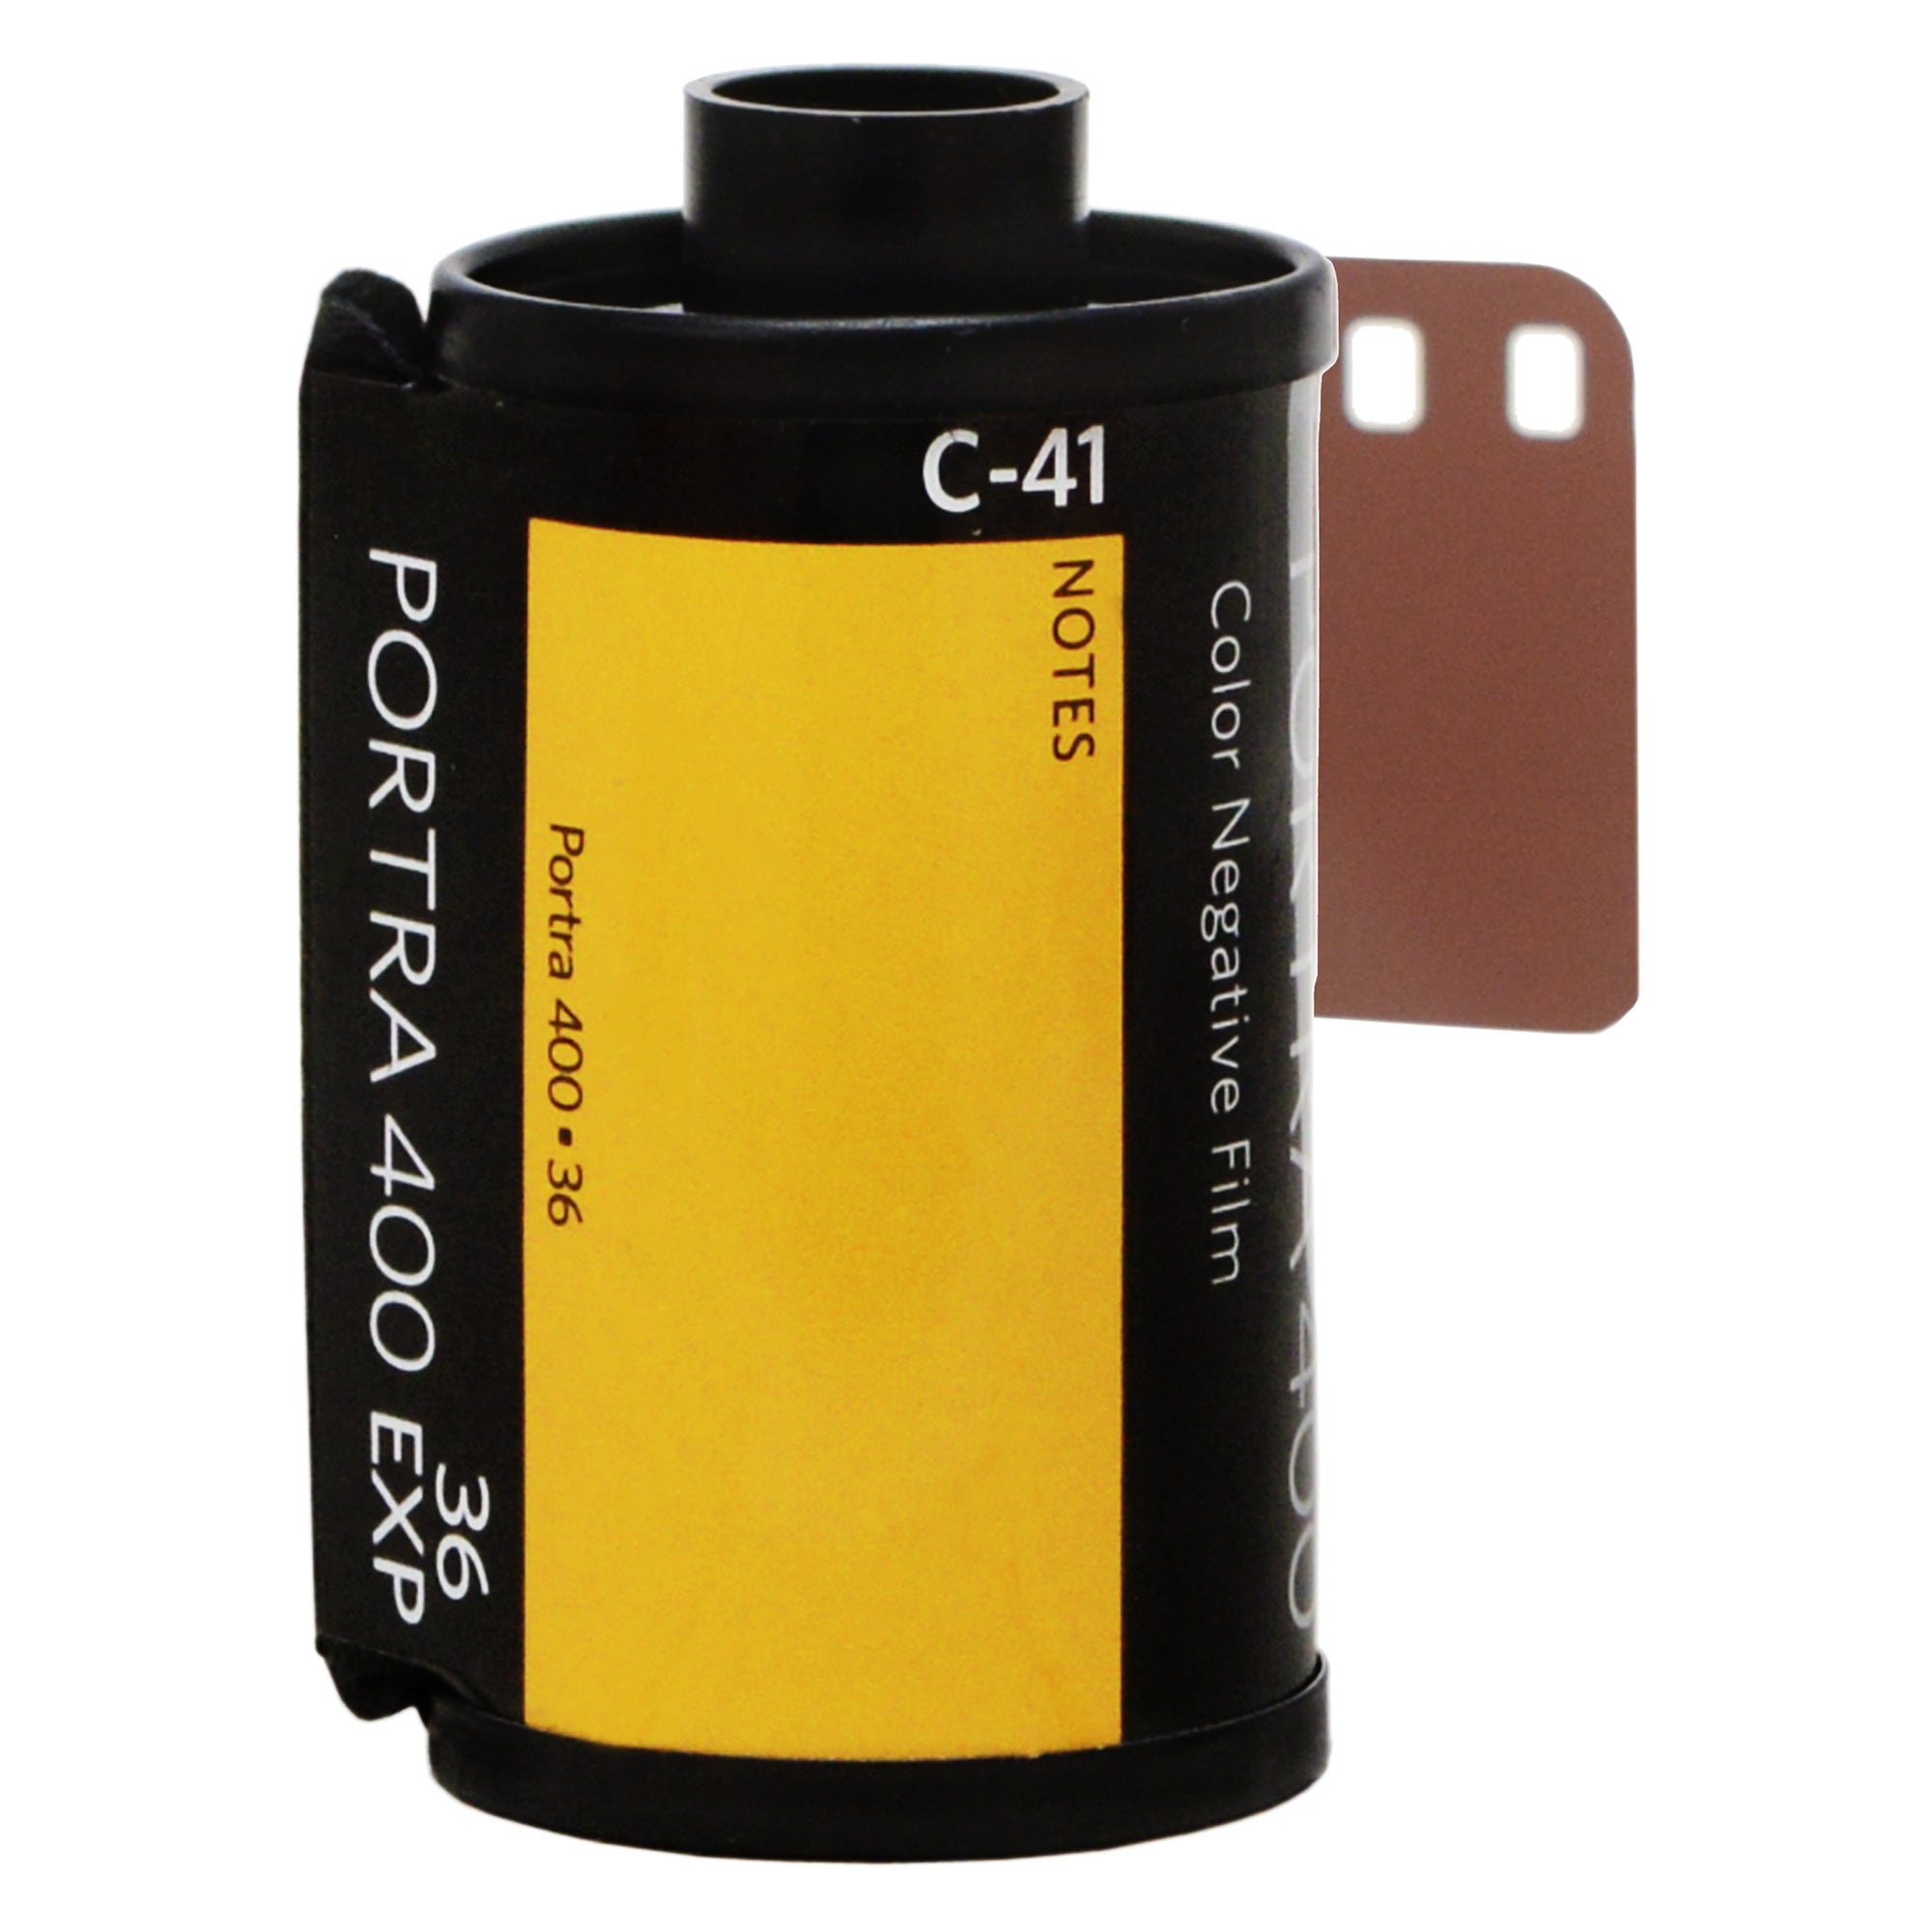 Kodak Portra 400 (135 type roll film, 36 Exposures)